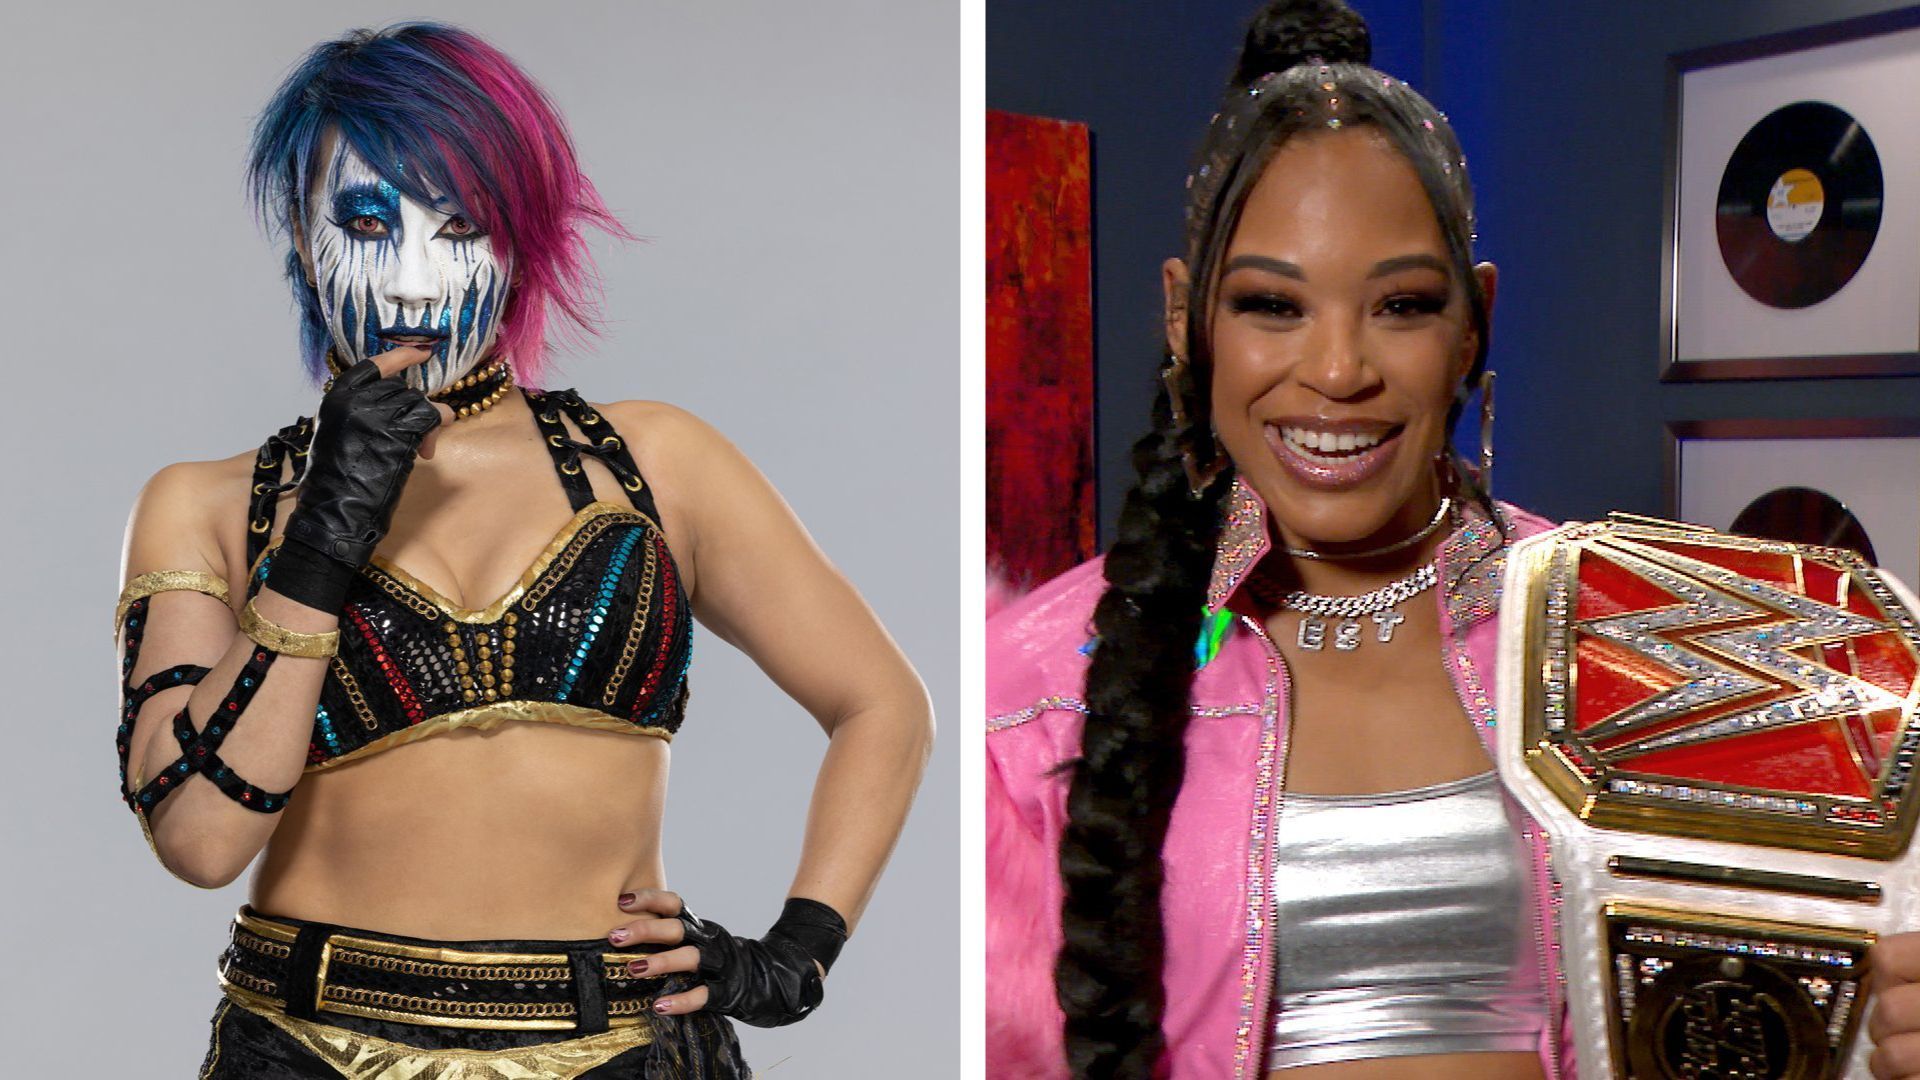 Asuka and Bianca Belair will clash at WWE WrestleMania Goes Hollywood